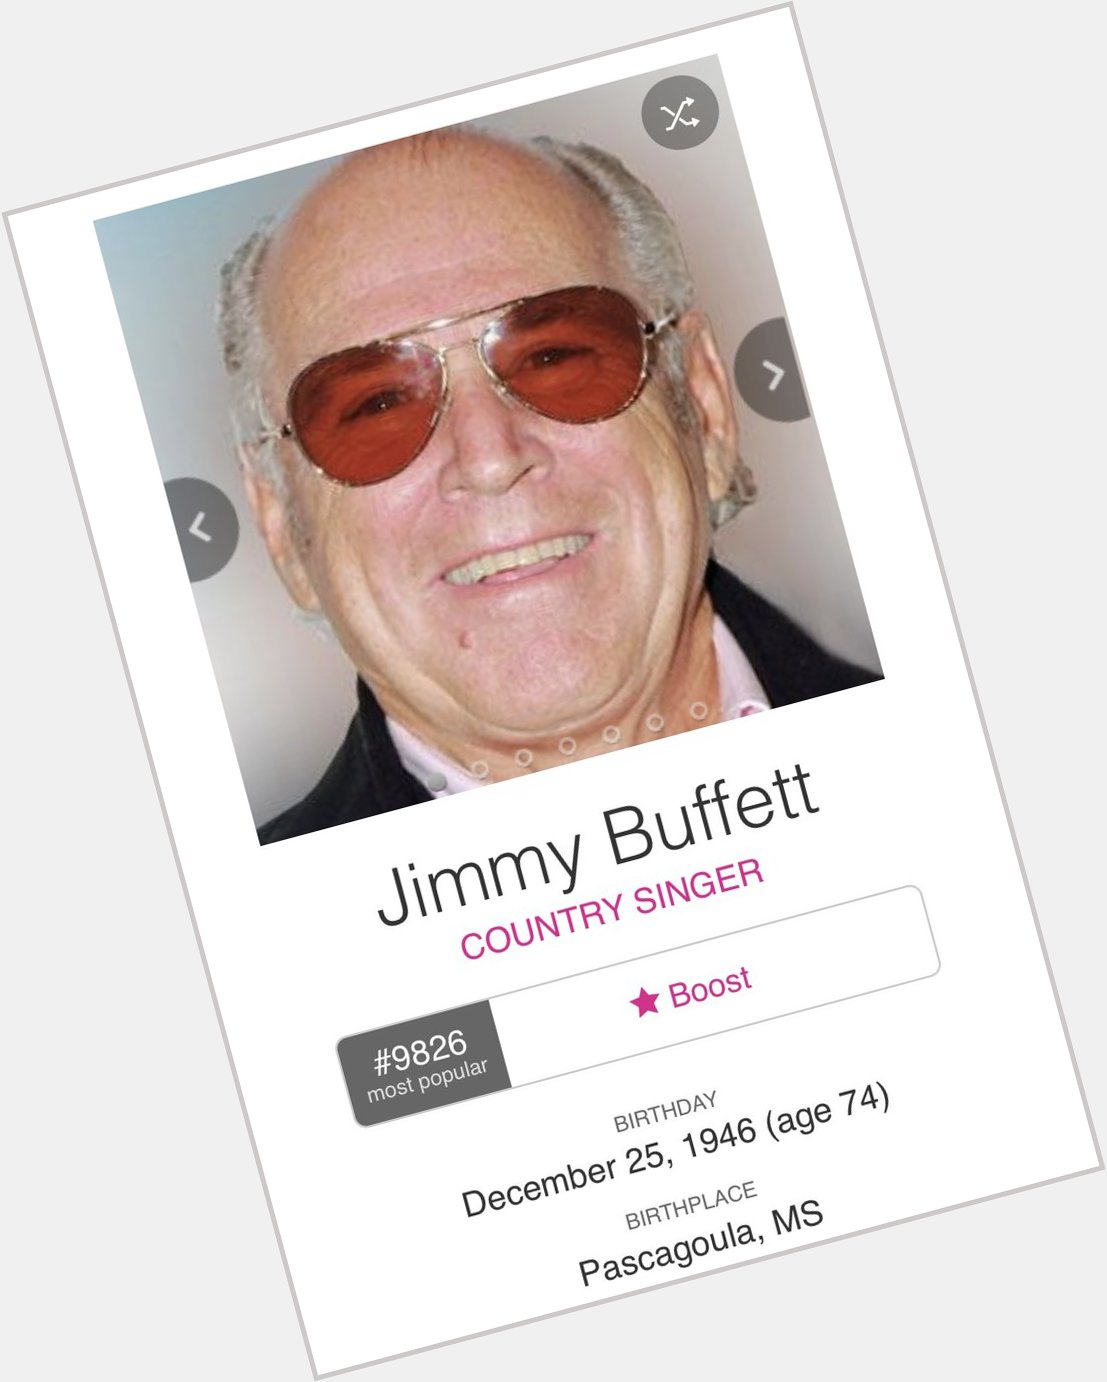 Happy Birthday to Jimmy Buffett! 